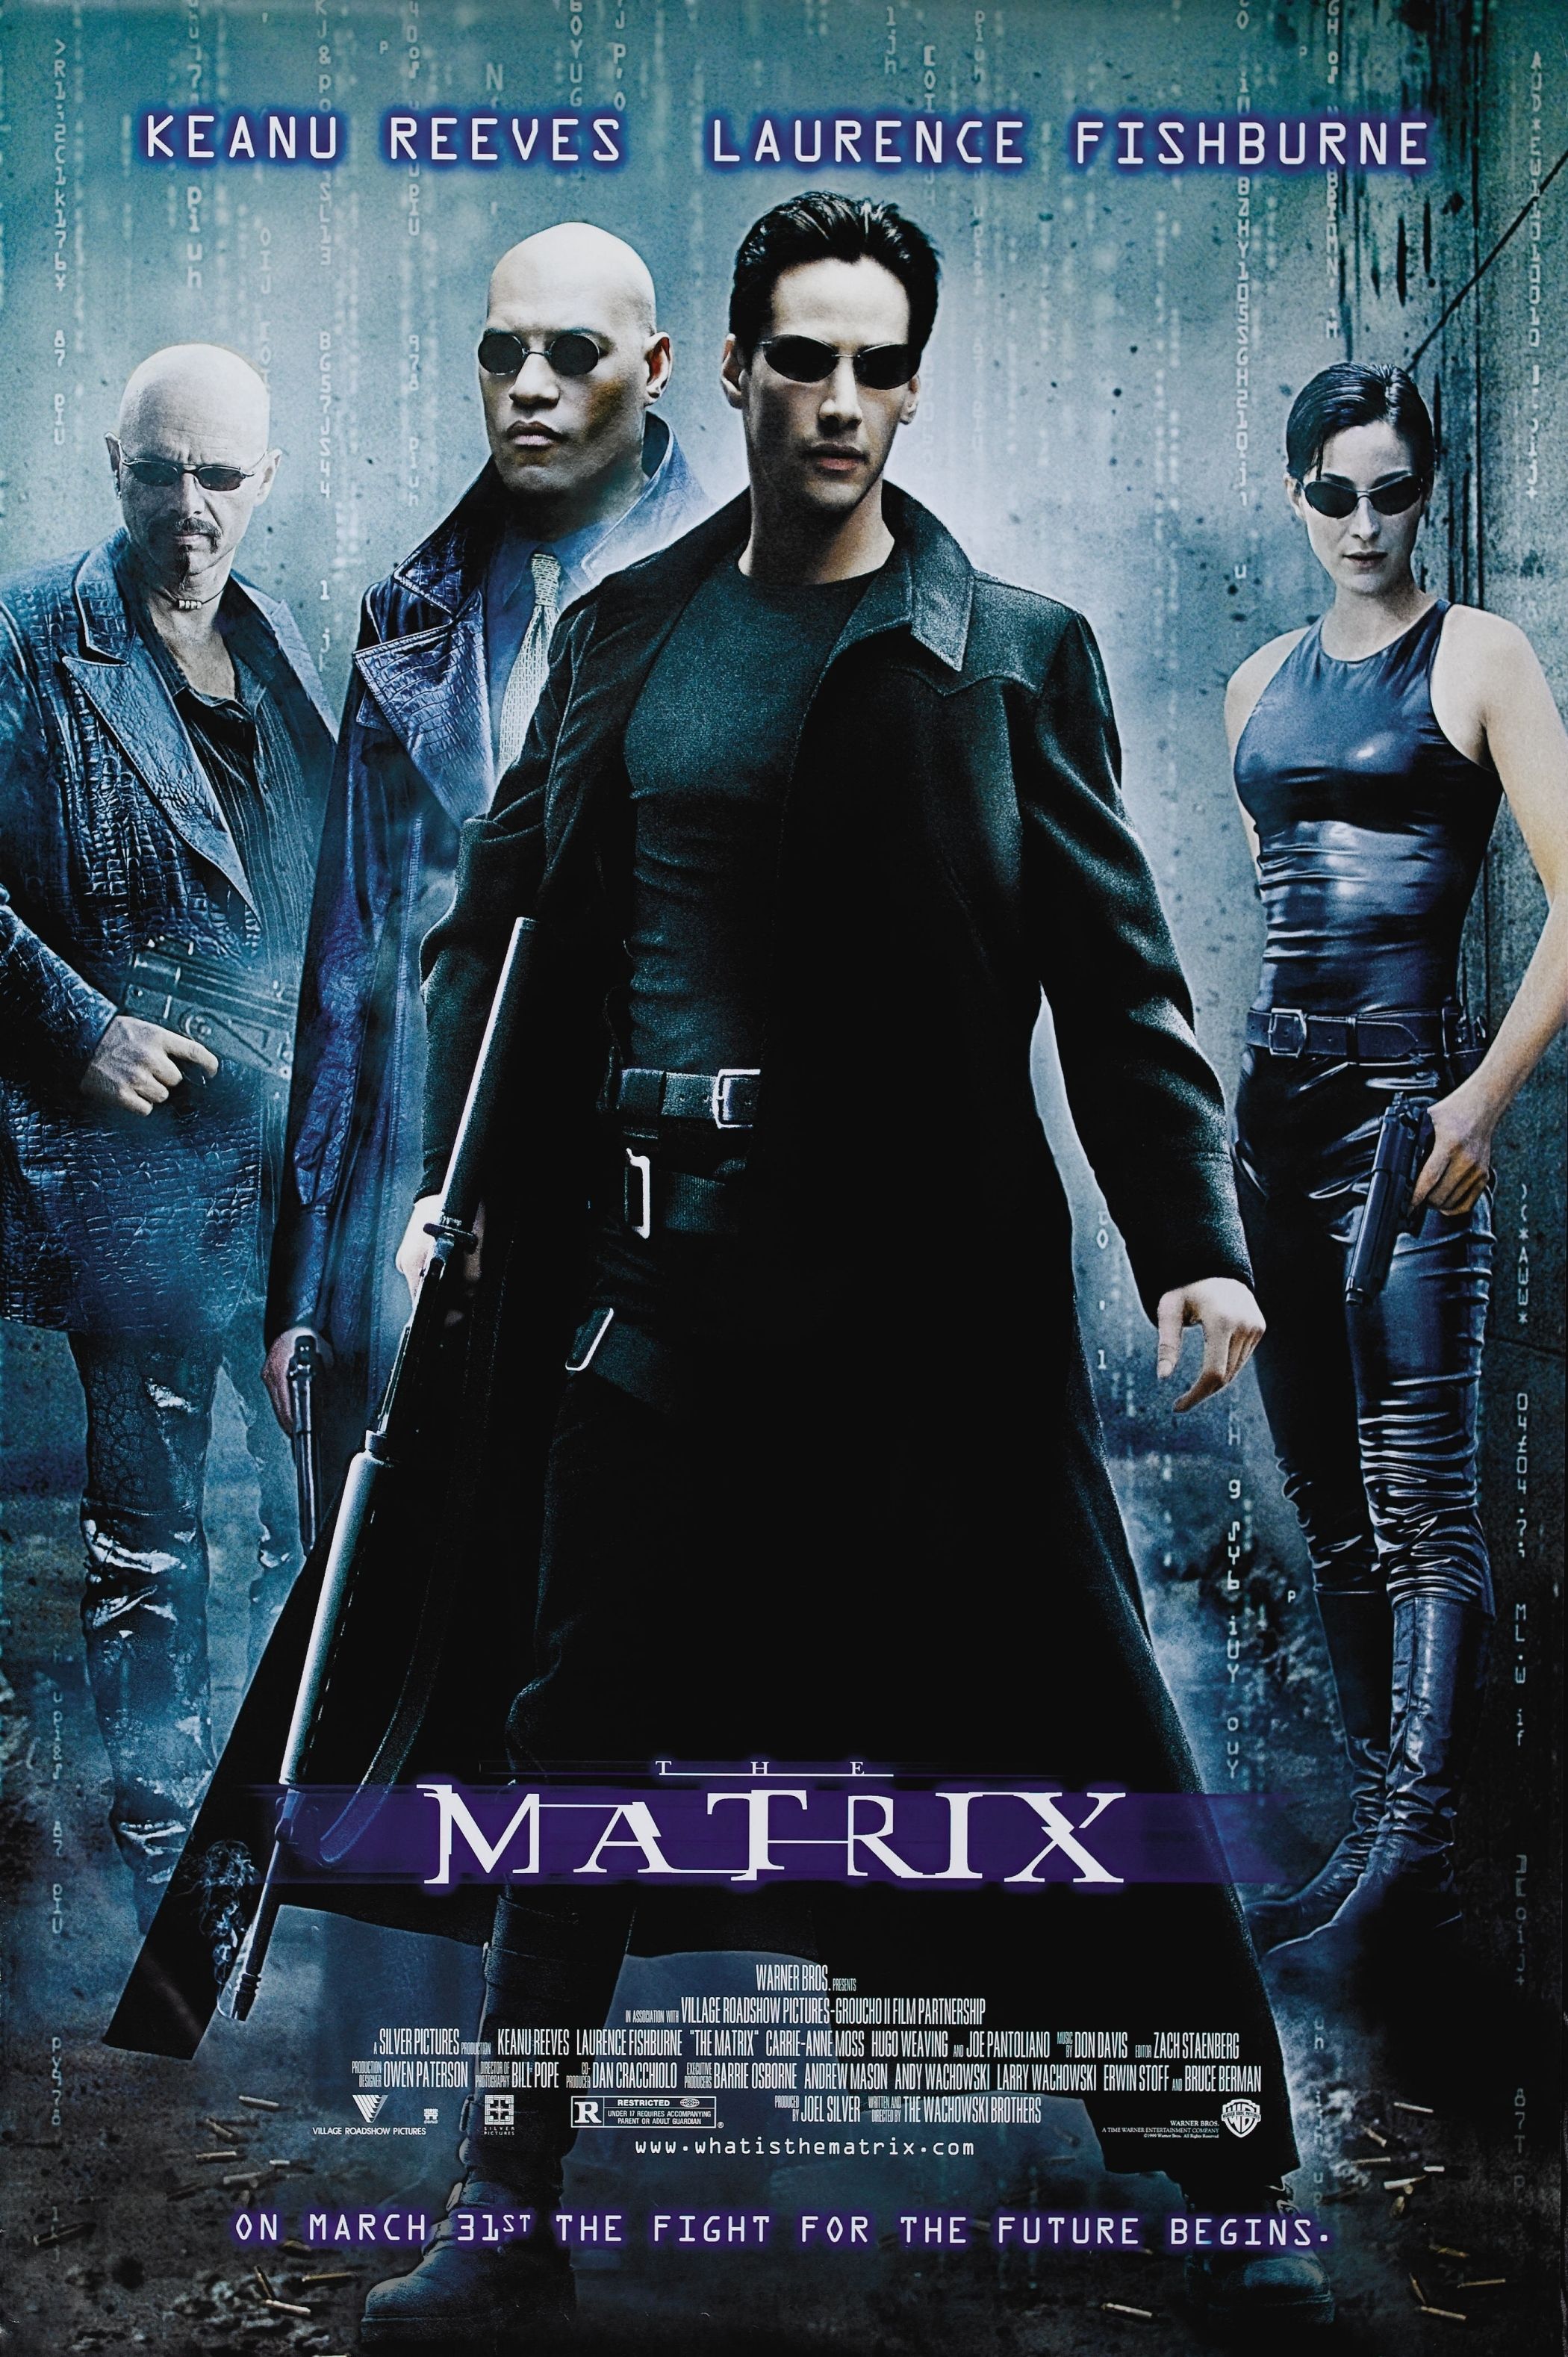 The Matrix Film Poster